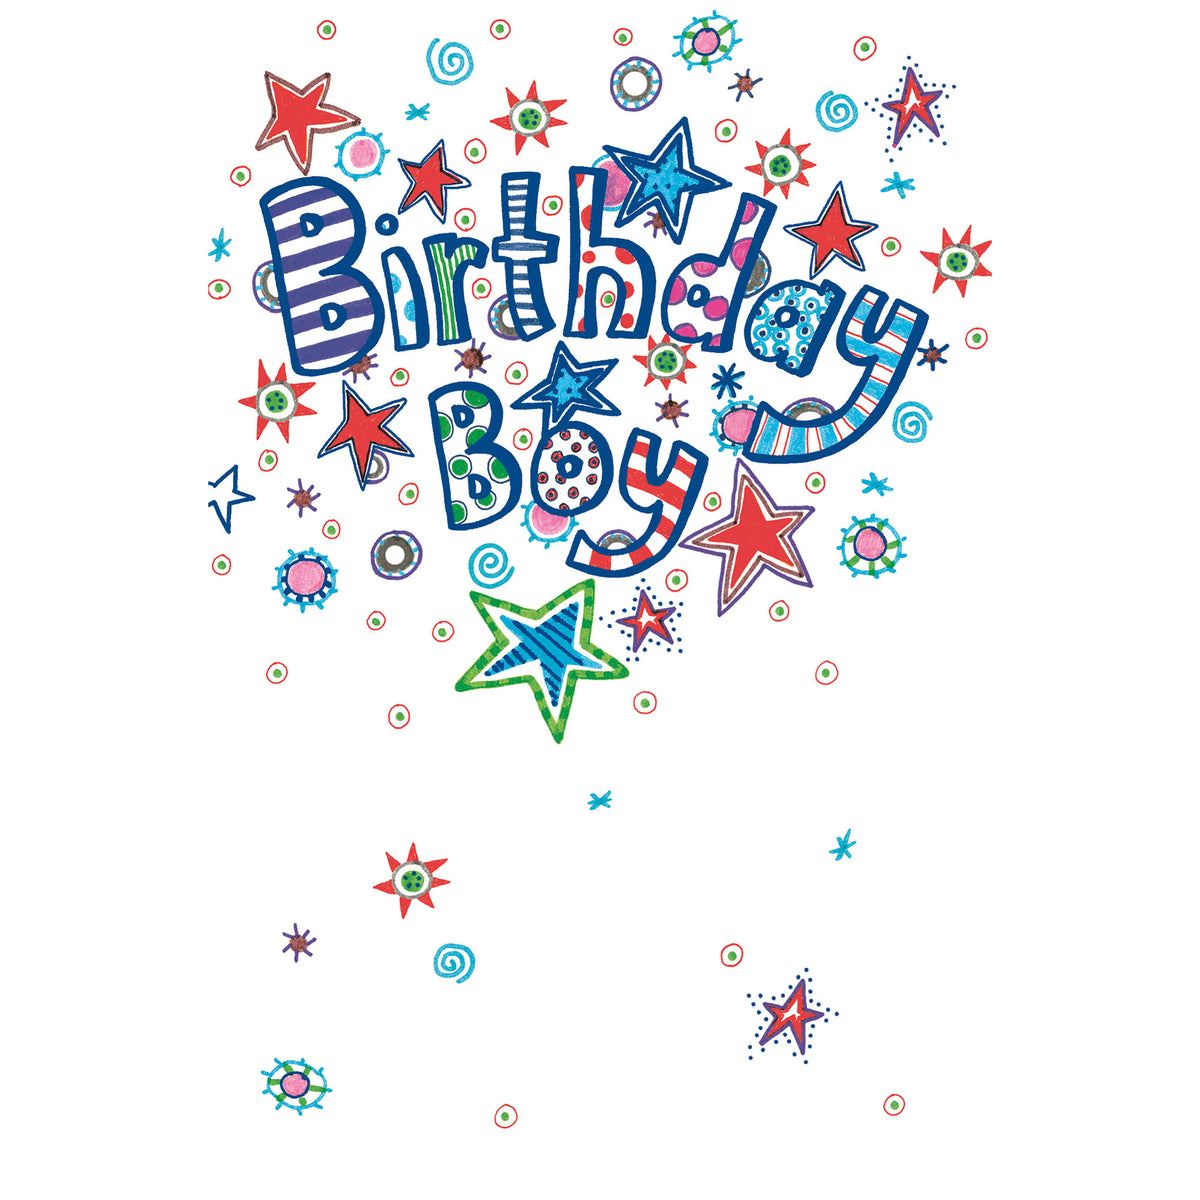 Birthday Boy Stars Greetings Card